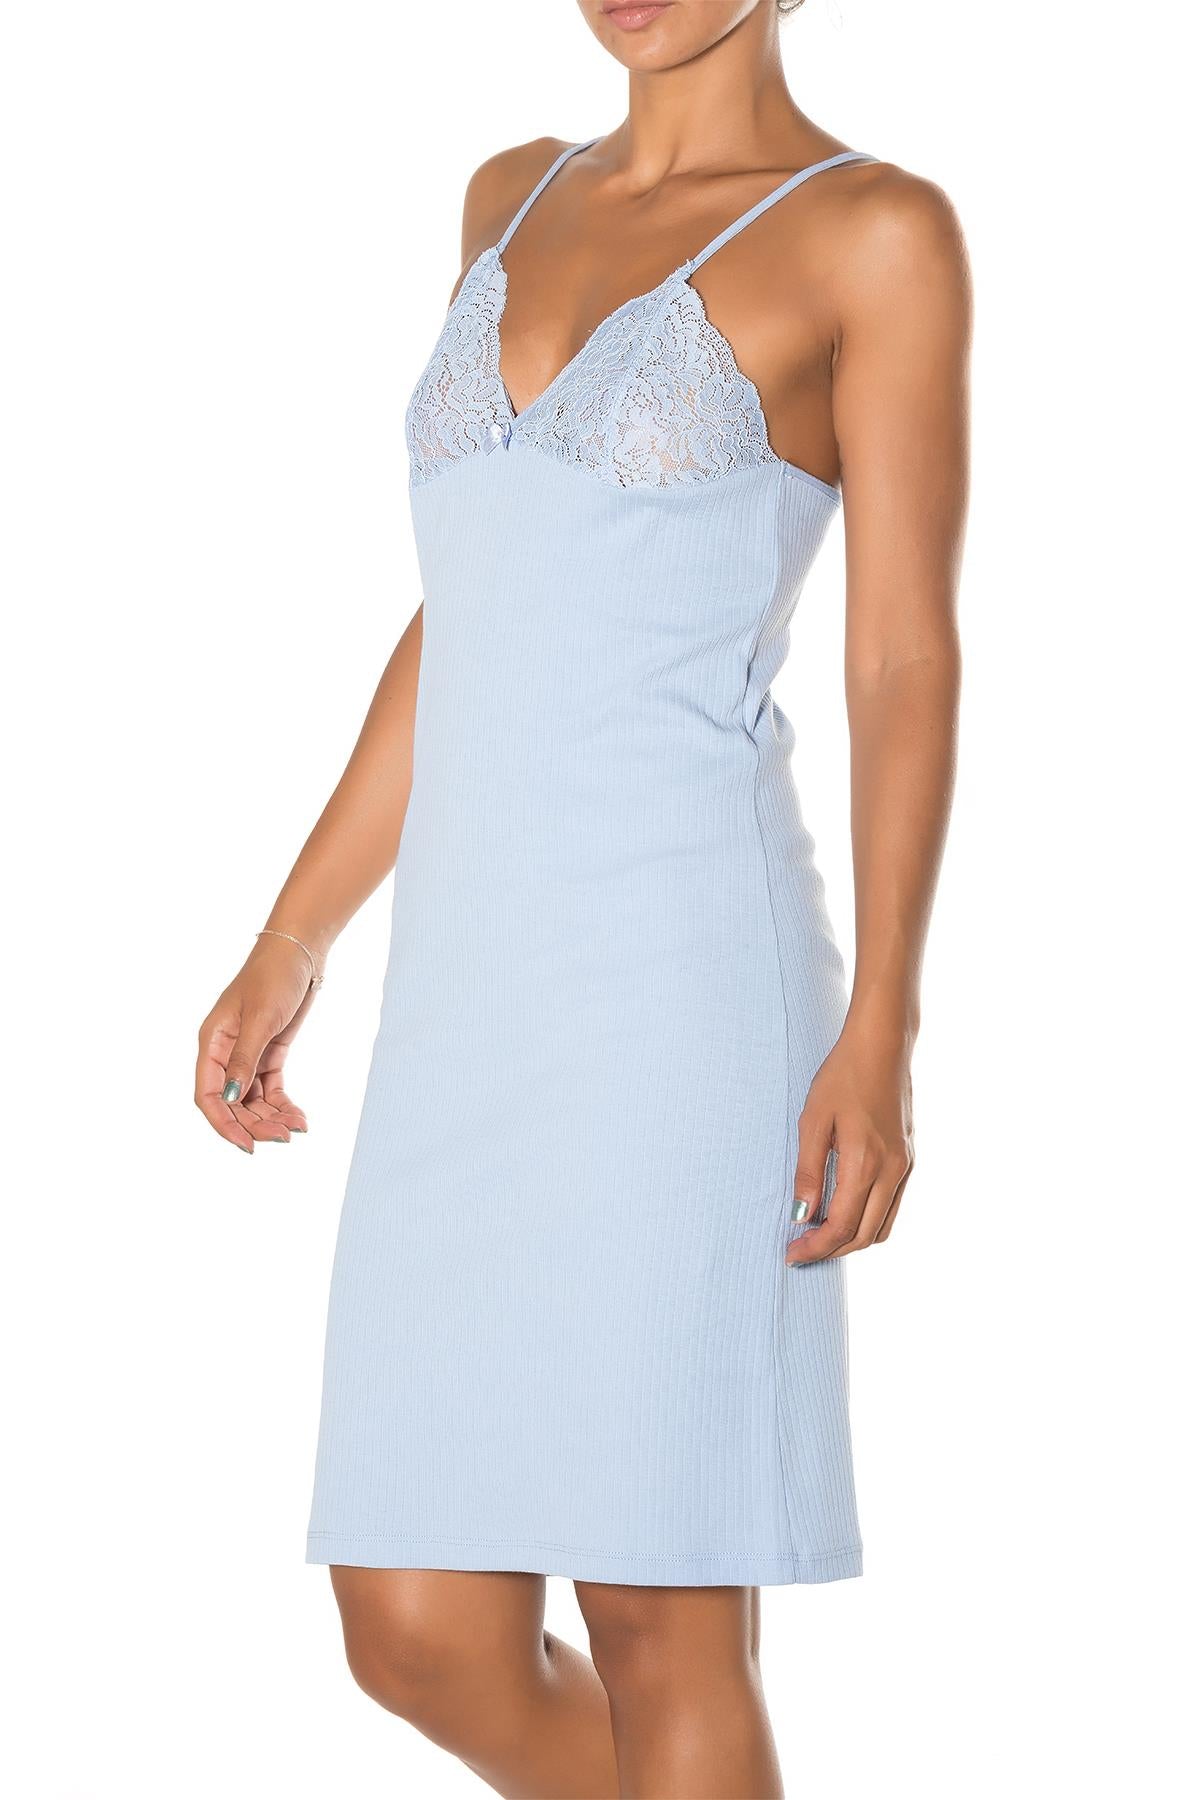 Sexy Lace %100 Cotton Nightgowns Homewear Sleepwear Nightdress Sleepshirts For Women Lingerie Sleep Night Wear Sleeping Dress